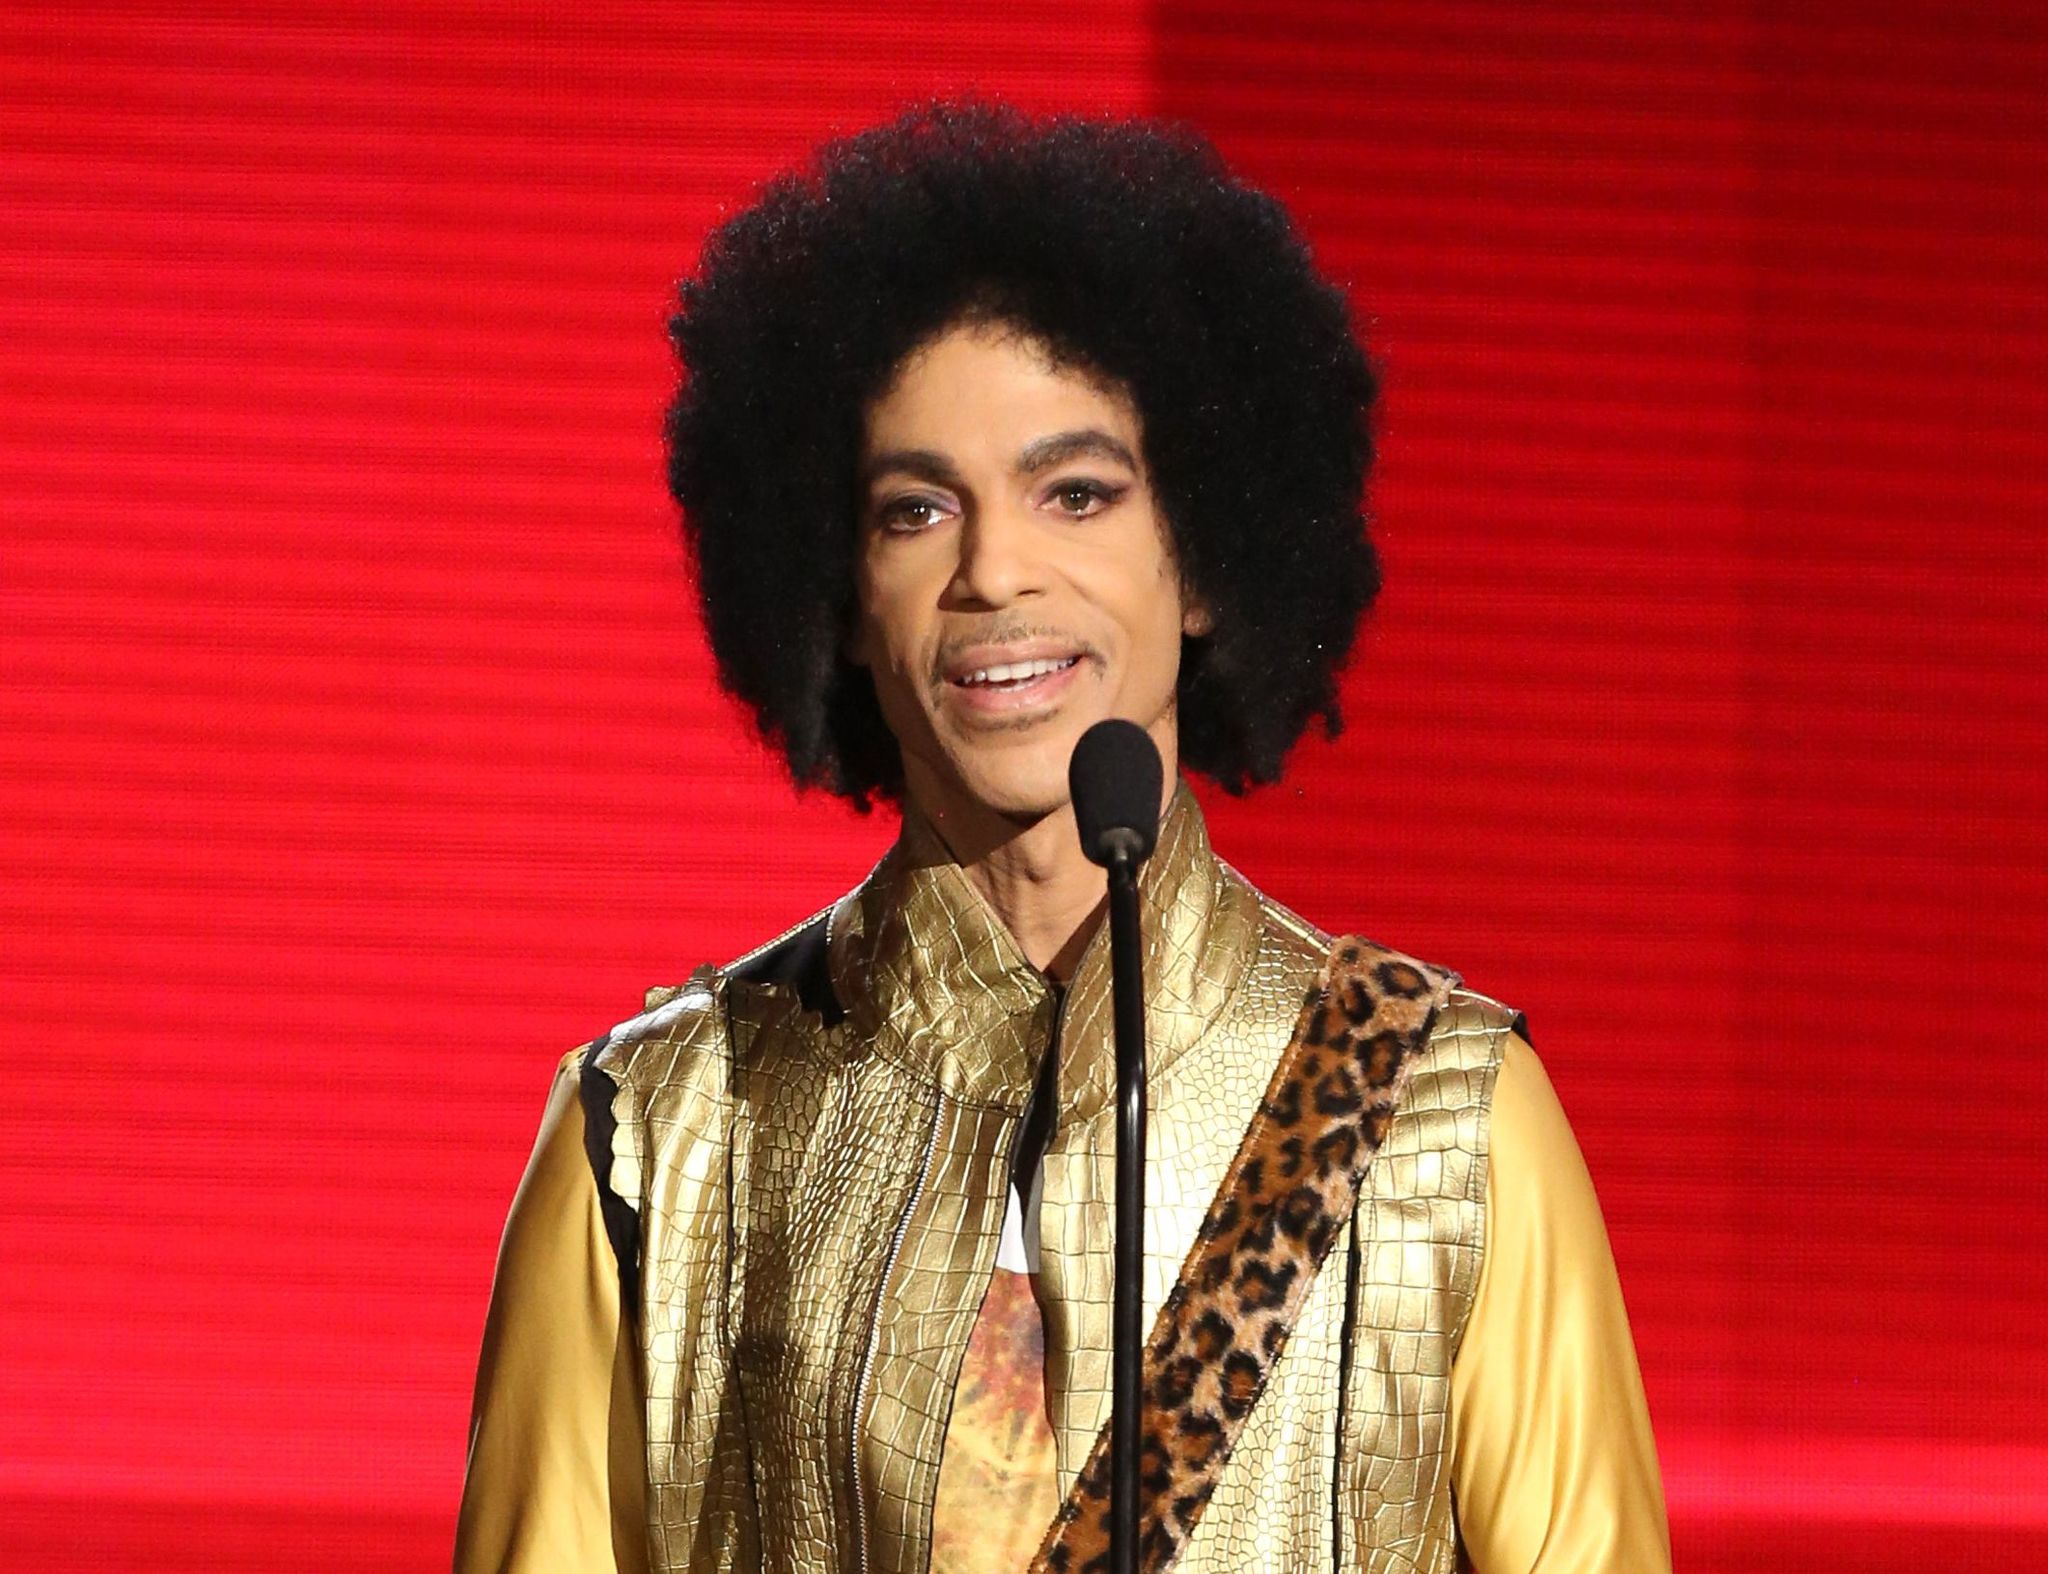 Celebrate Prince’s life on Saturday in Everett.